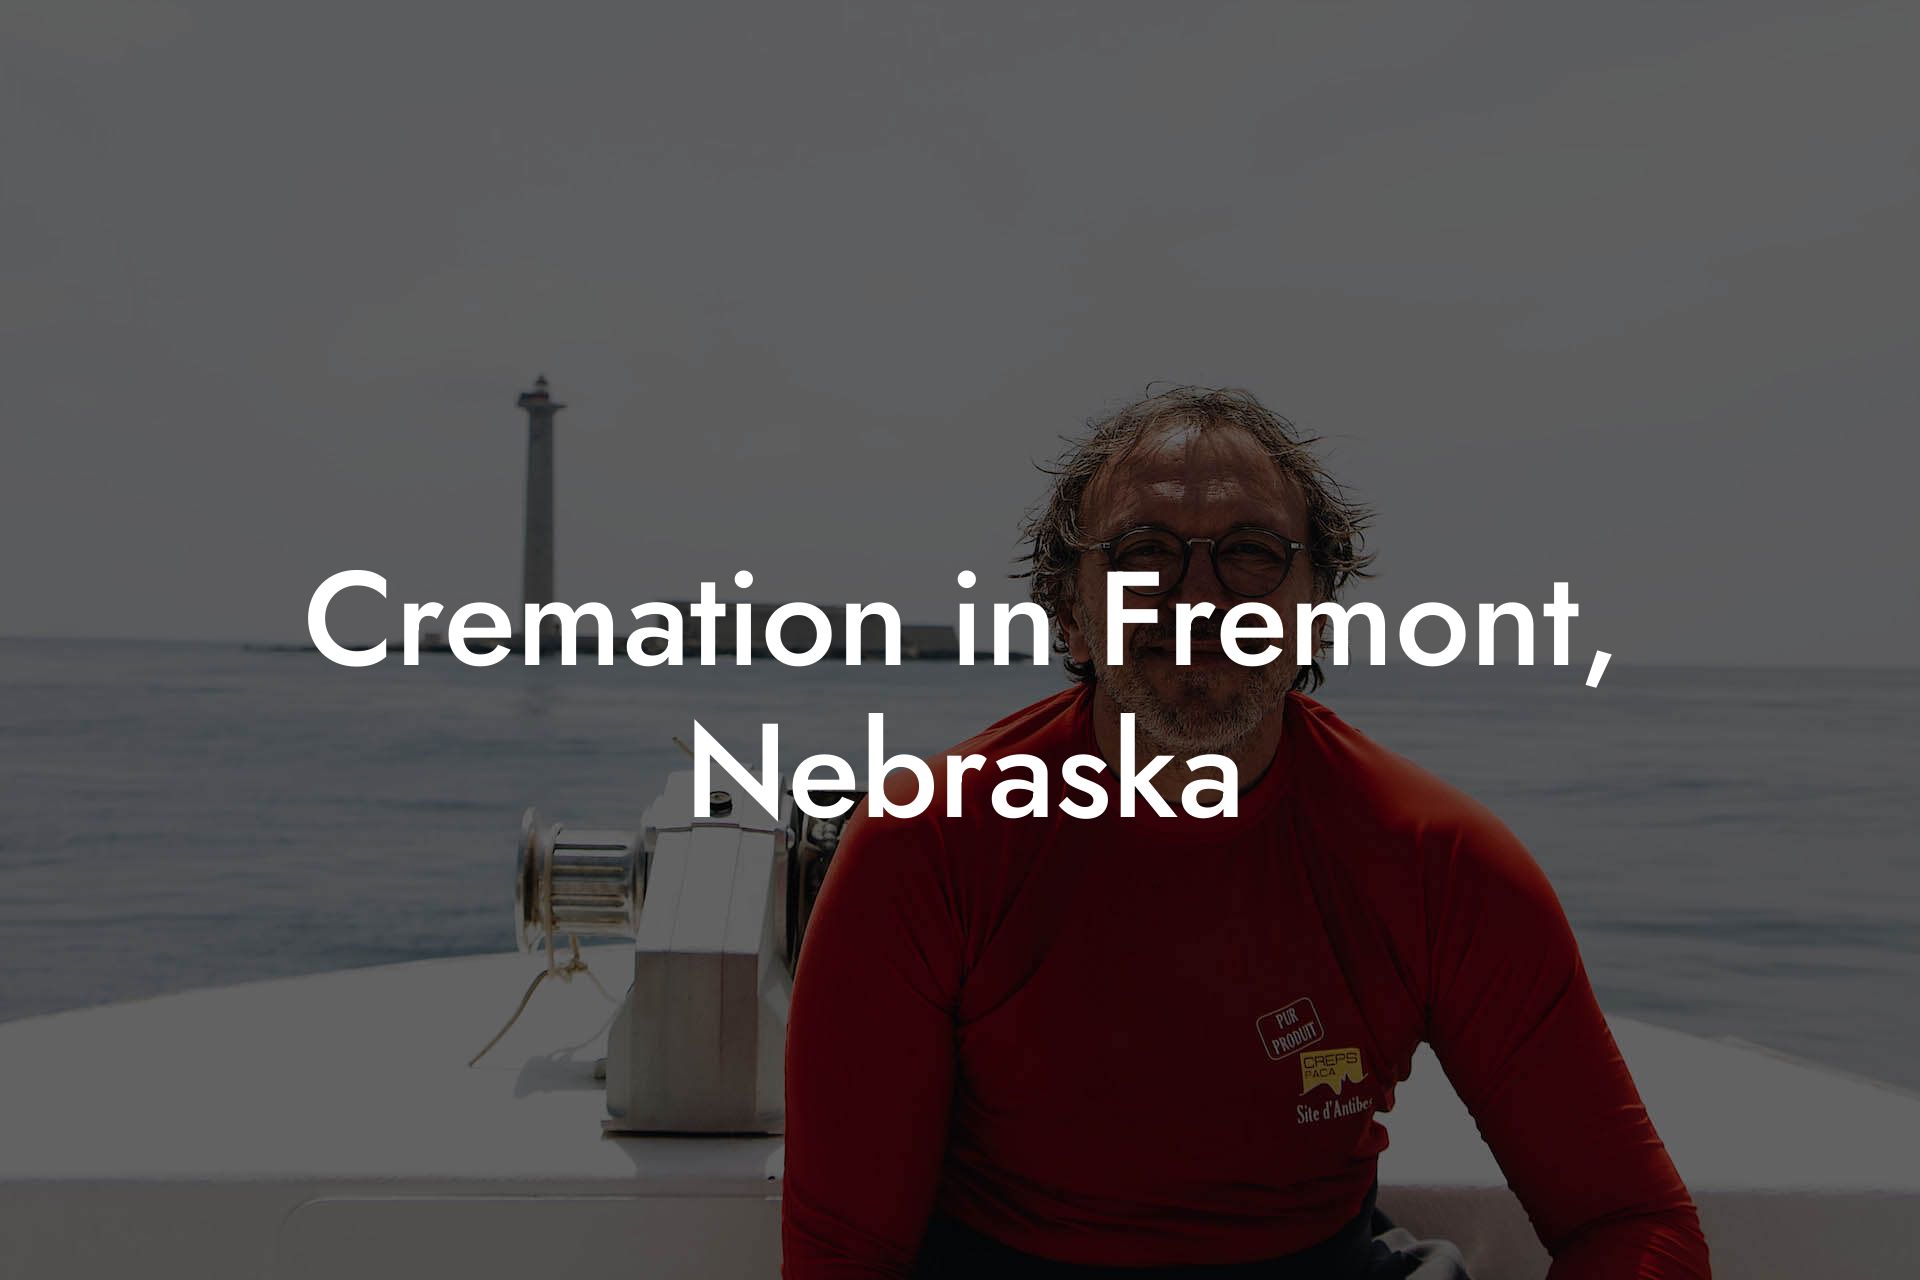 Cremation in Fremont, Nebraska